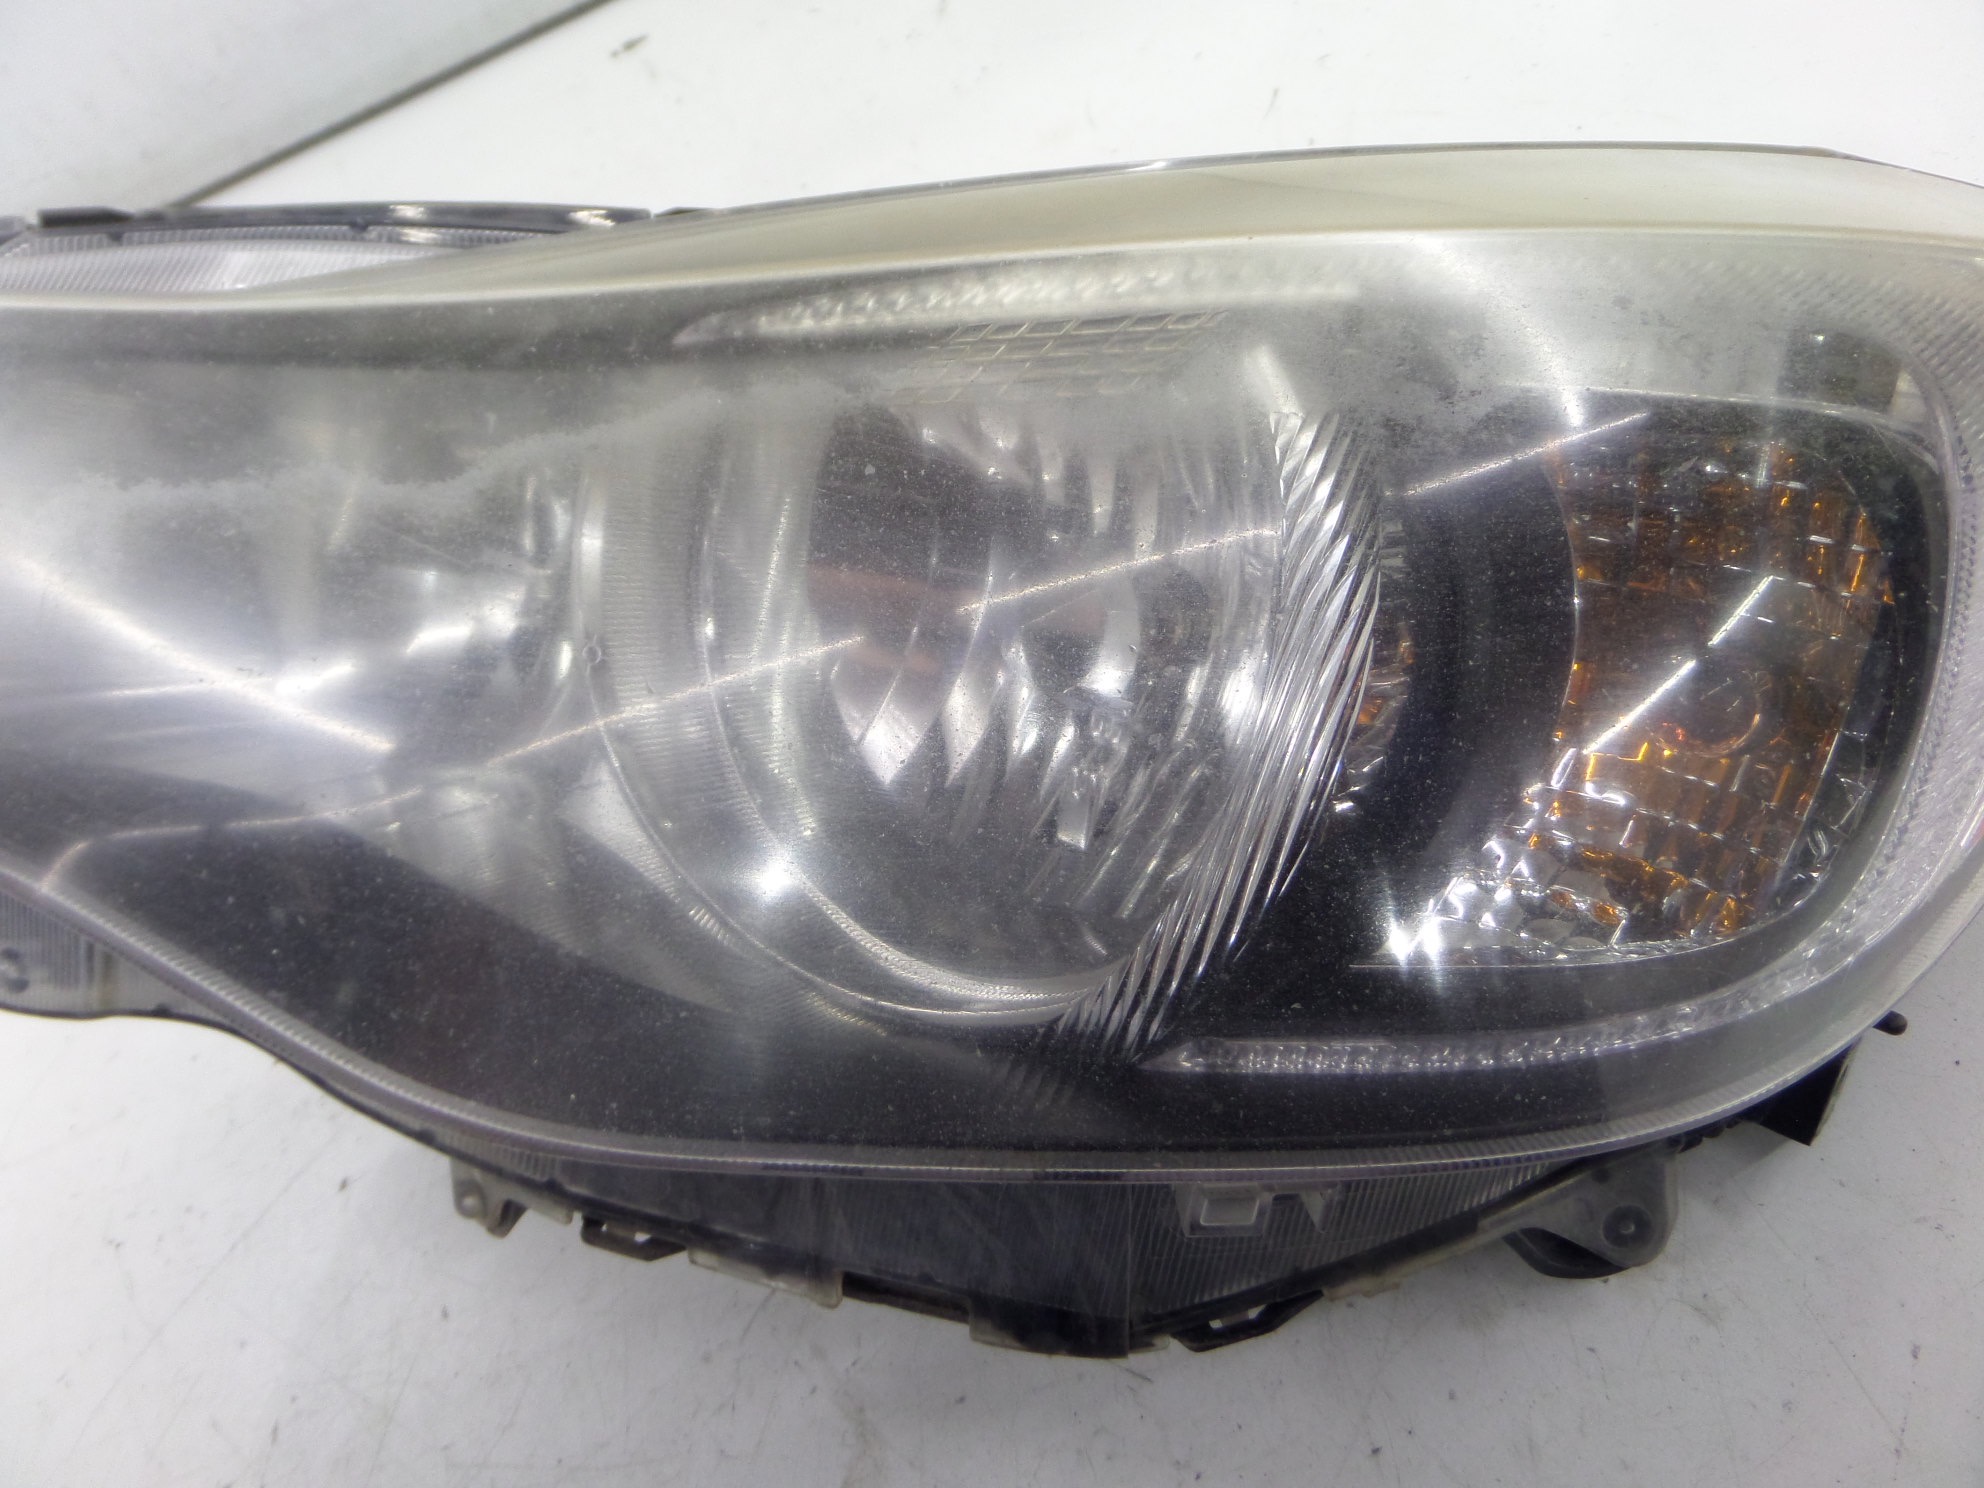 Subaru Impreza Left Headlight GH 0814 OEM eBay